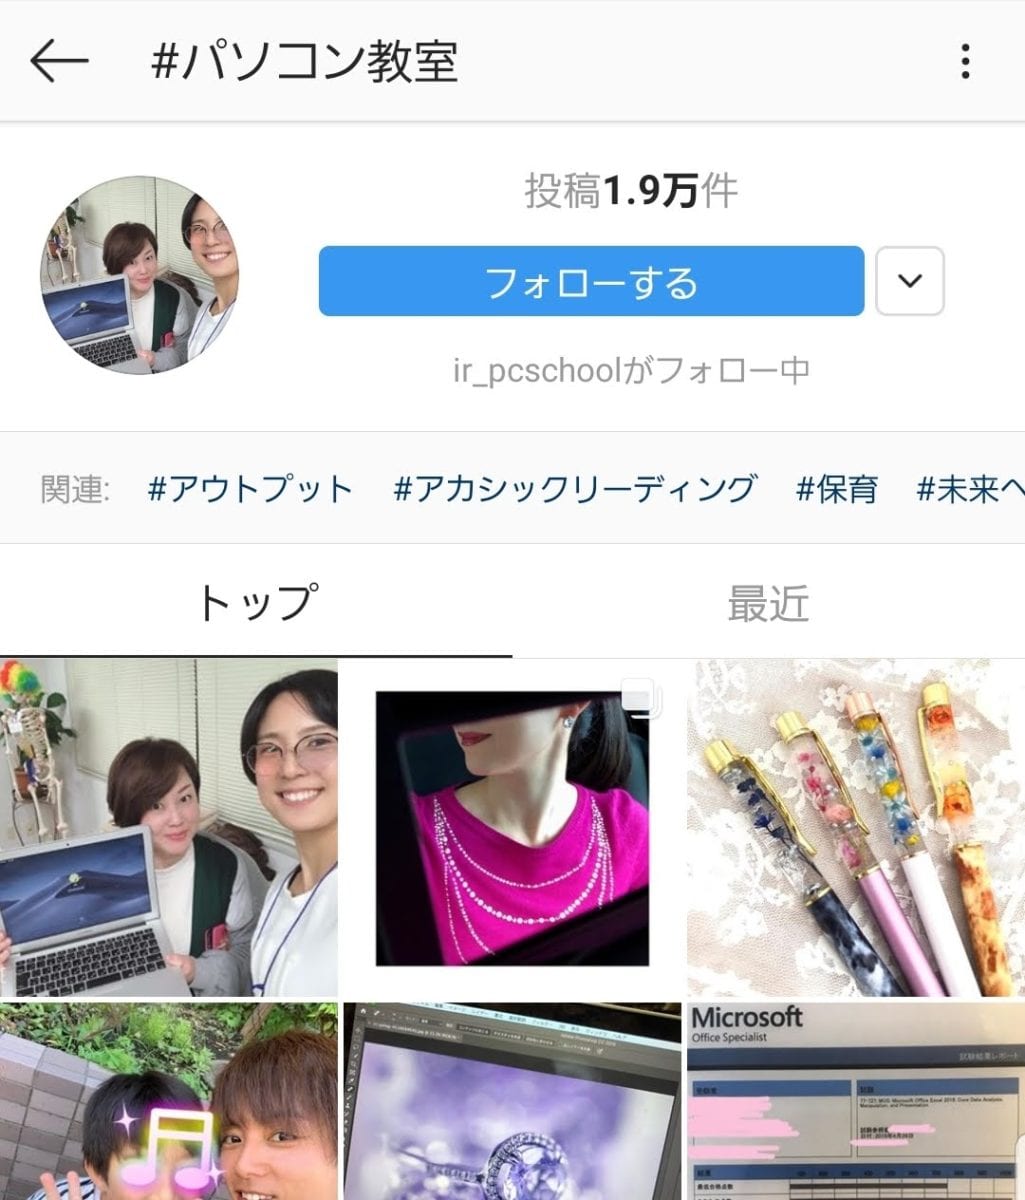 Instagram ハッシュタグ「#パソコン教室」の画面